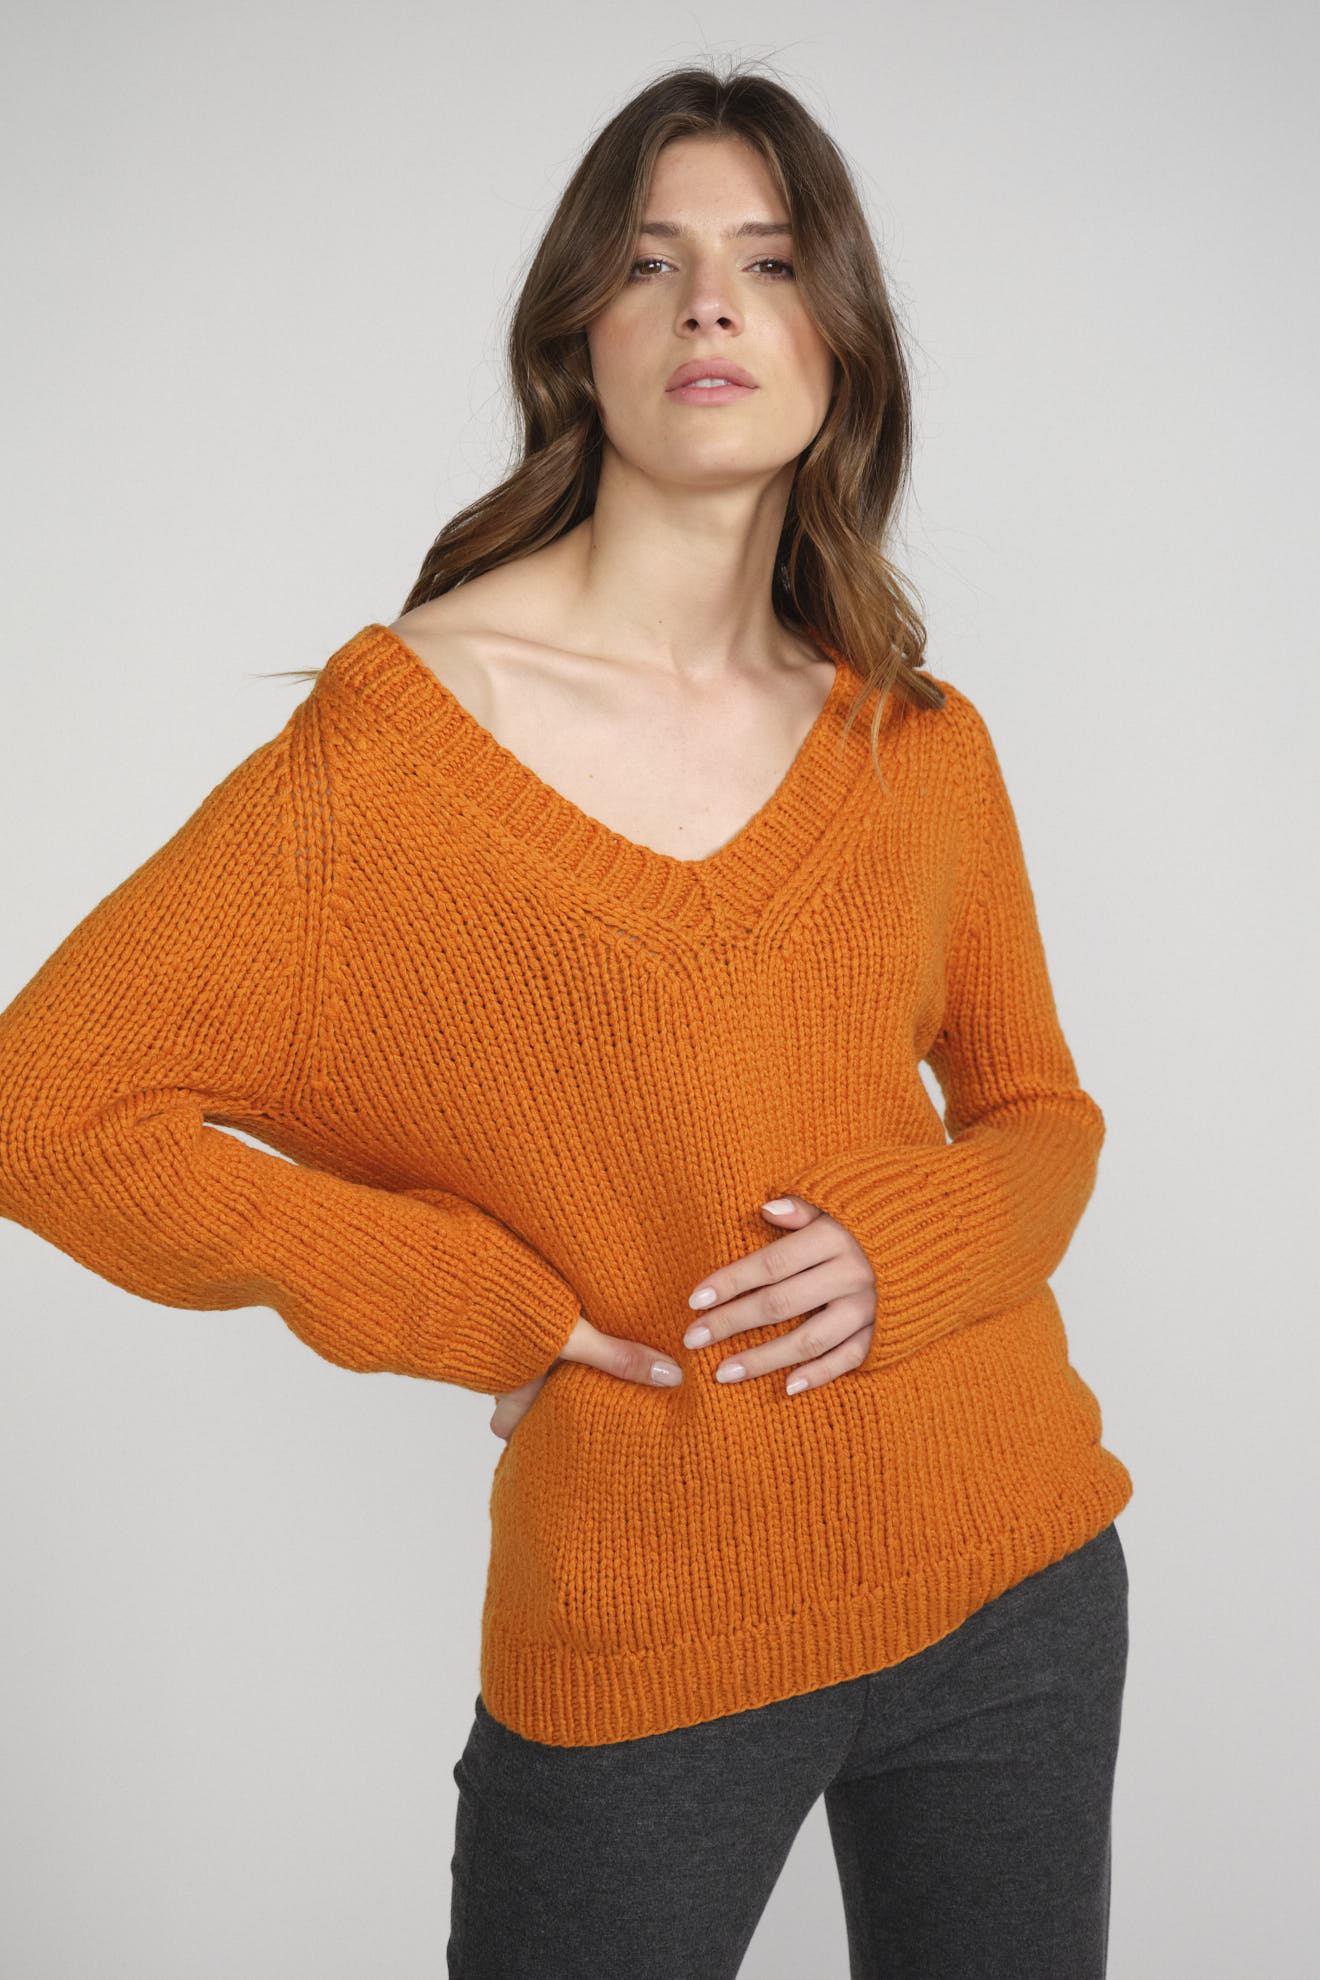 wommelsdorf sweater orange plain cotton